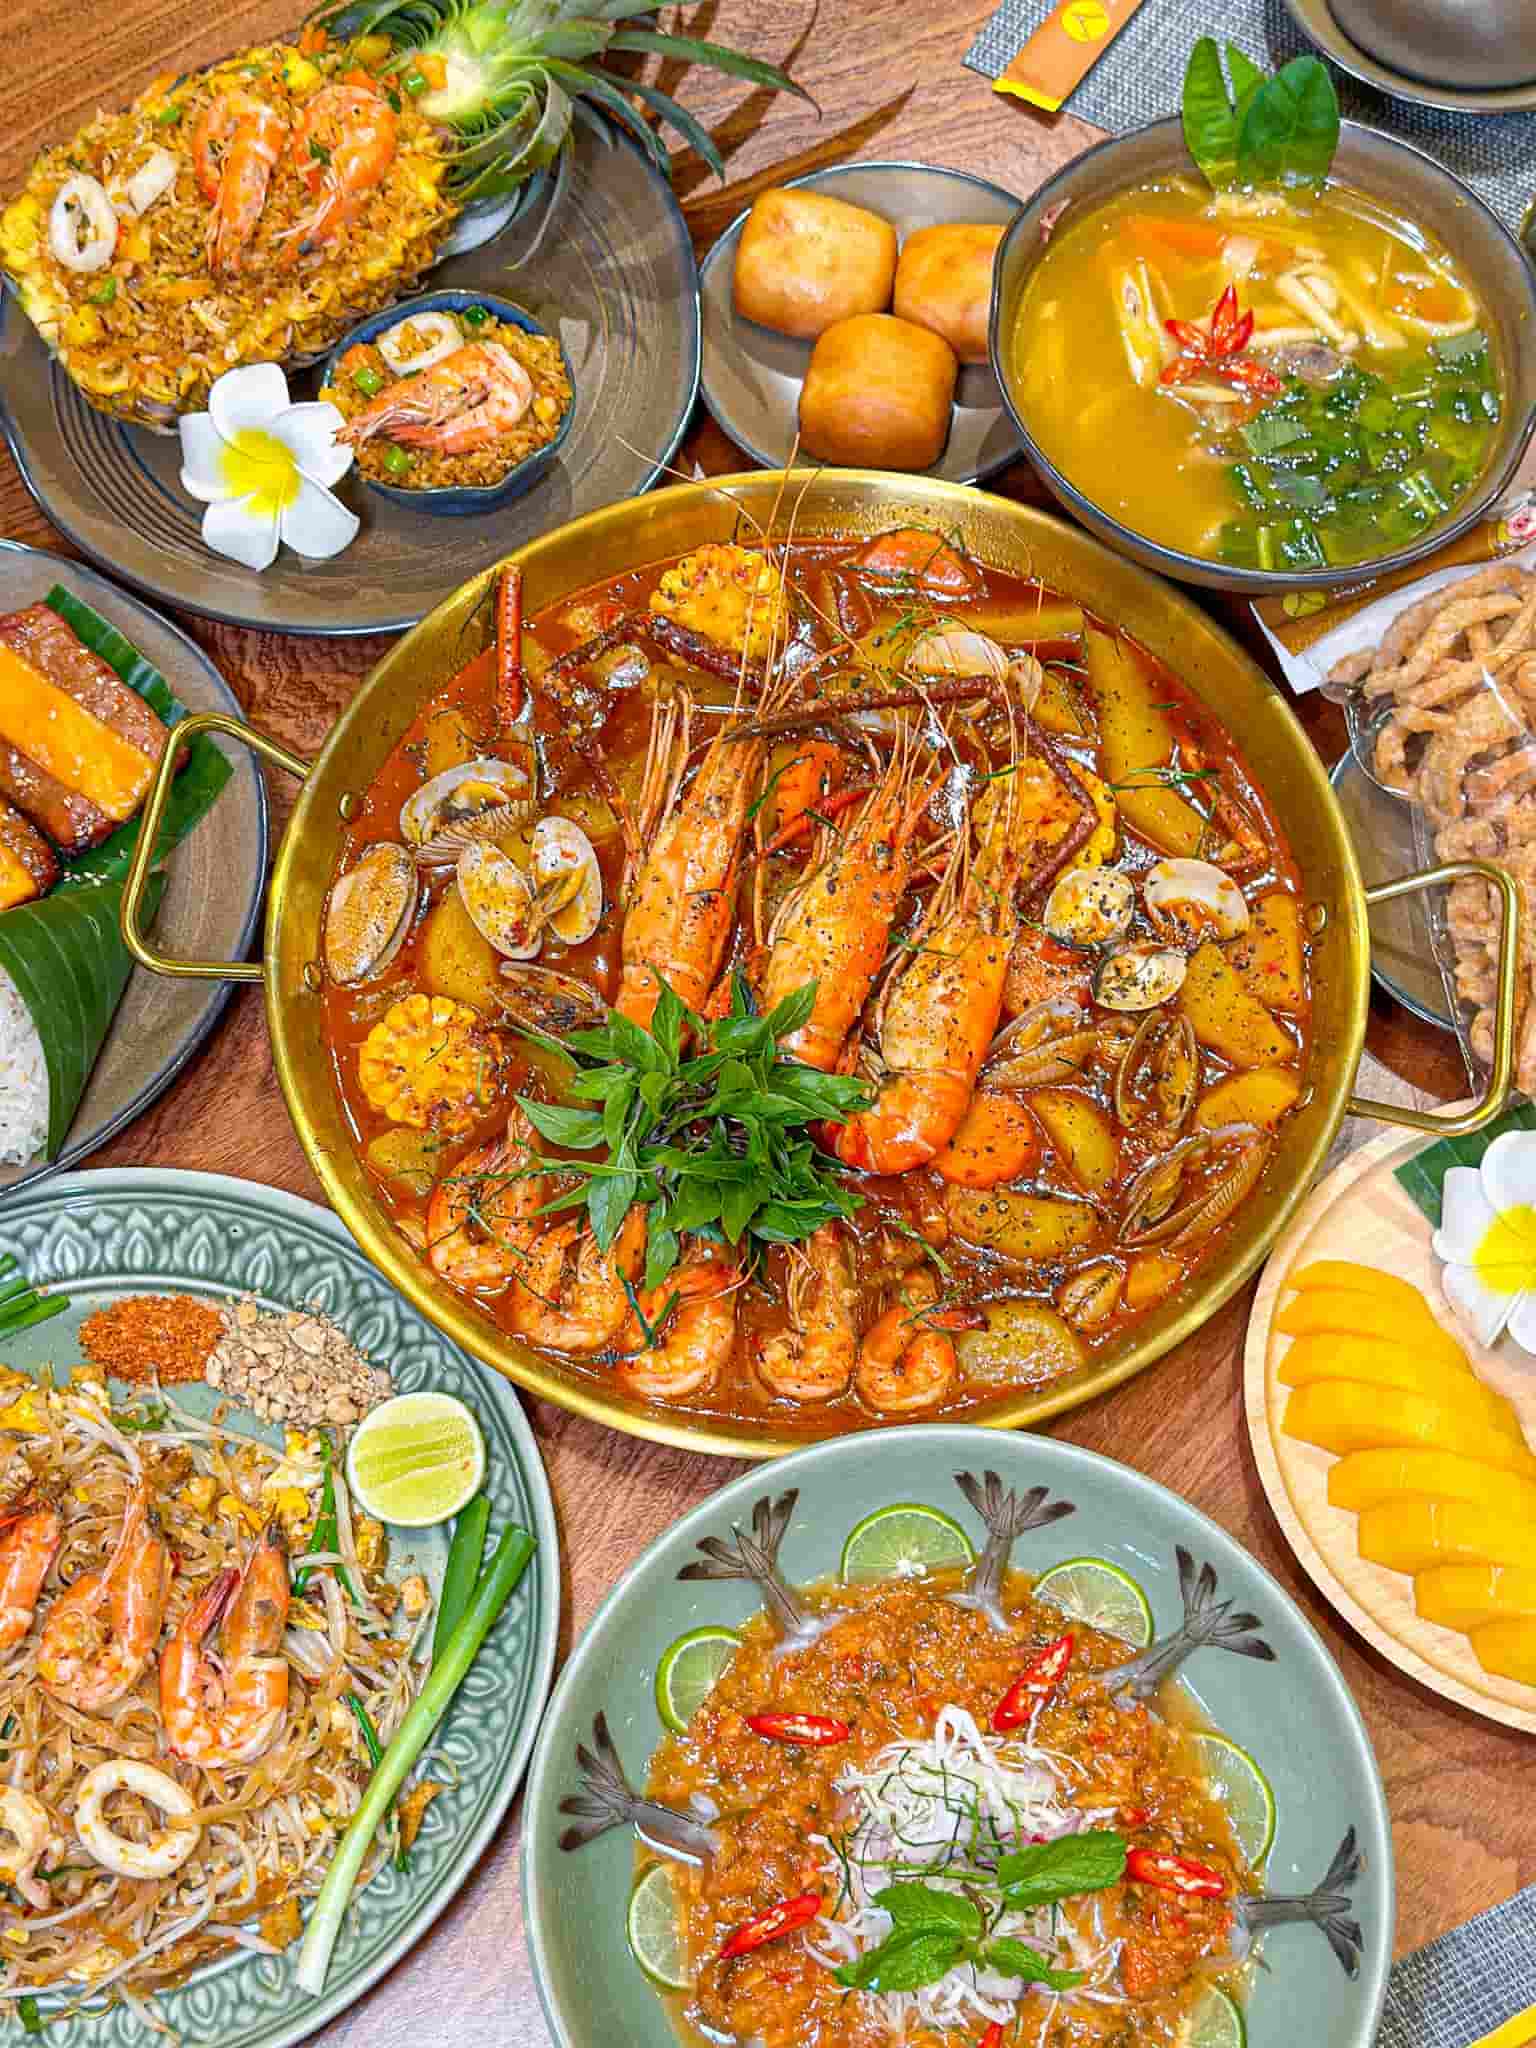 The Thai Cuisine